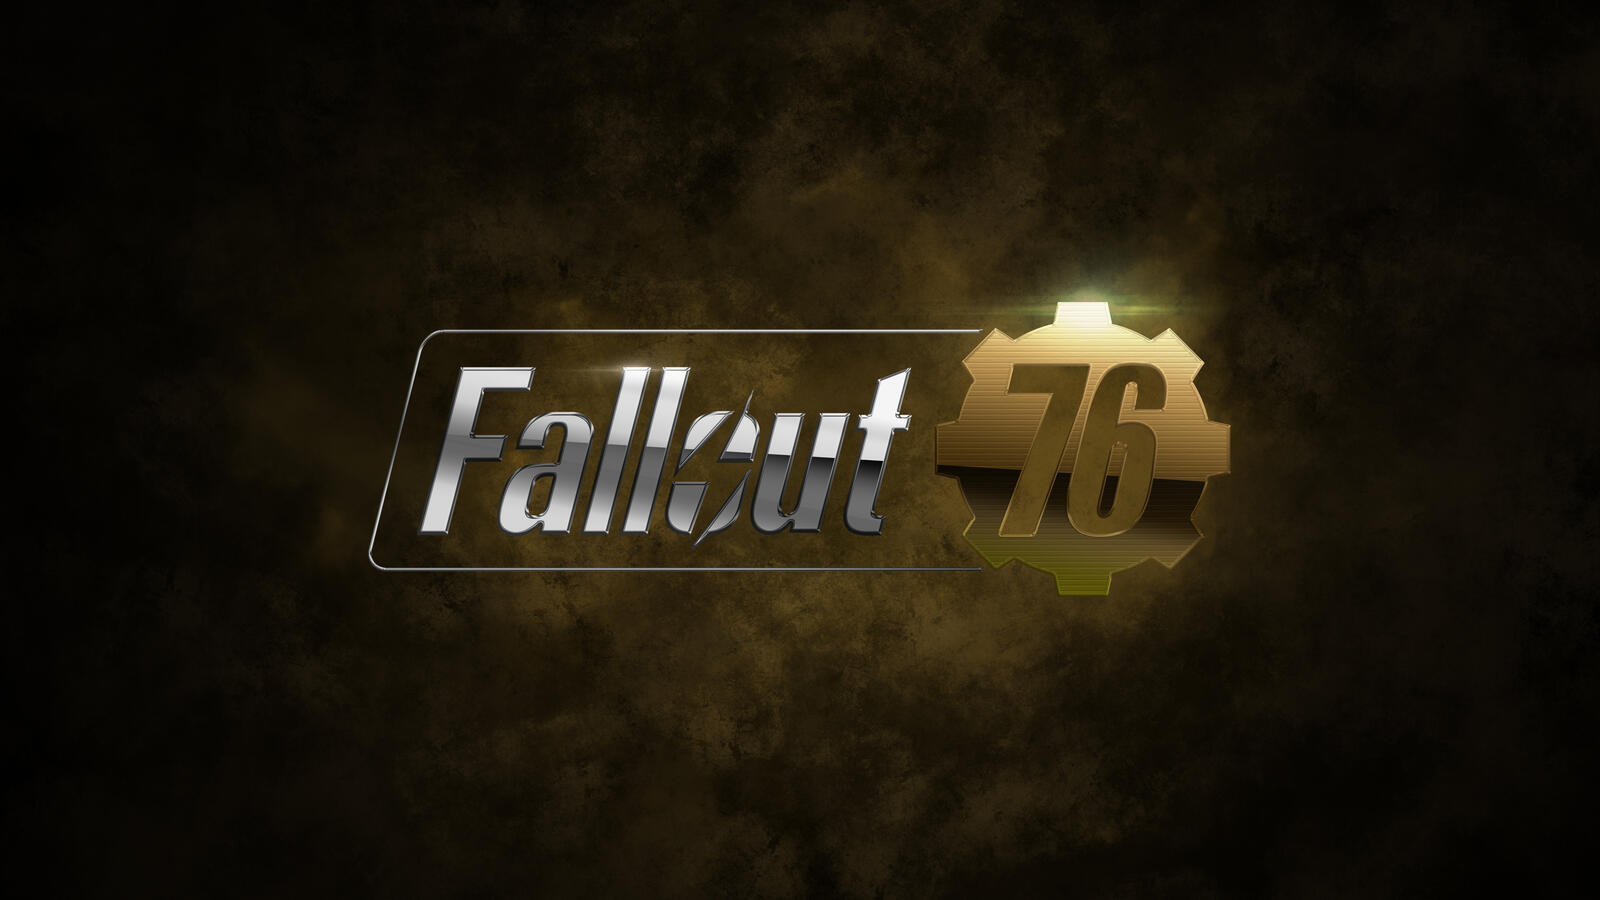 Free photo Fallout 76 game logo